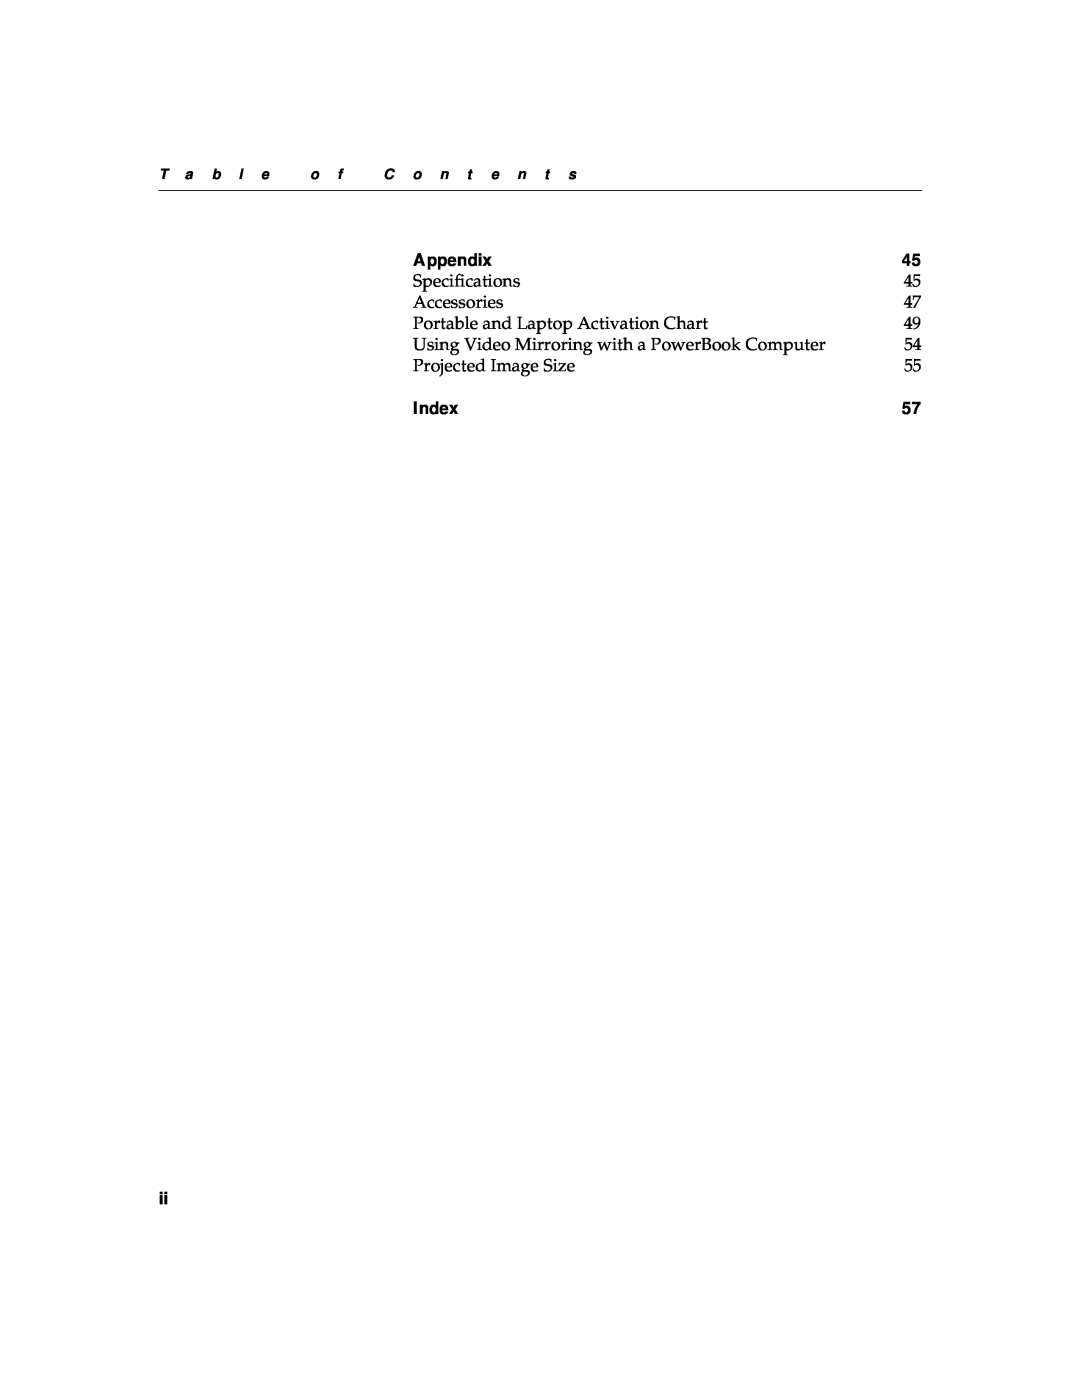 InFocus LPTM425z Appendix, Index, Specifications, Accessories, Portable and Laptop Activation Chart, Projected Image Size 